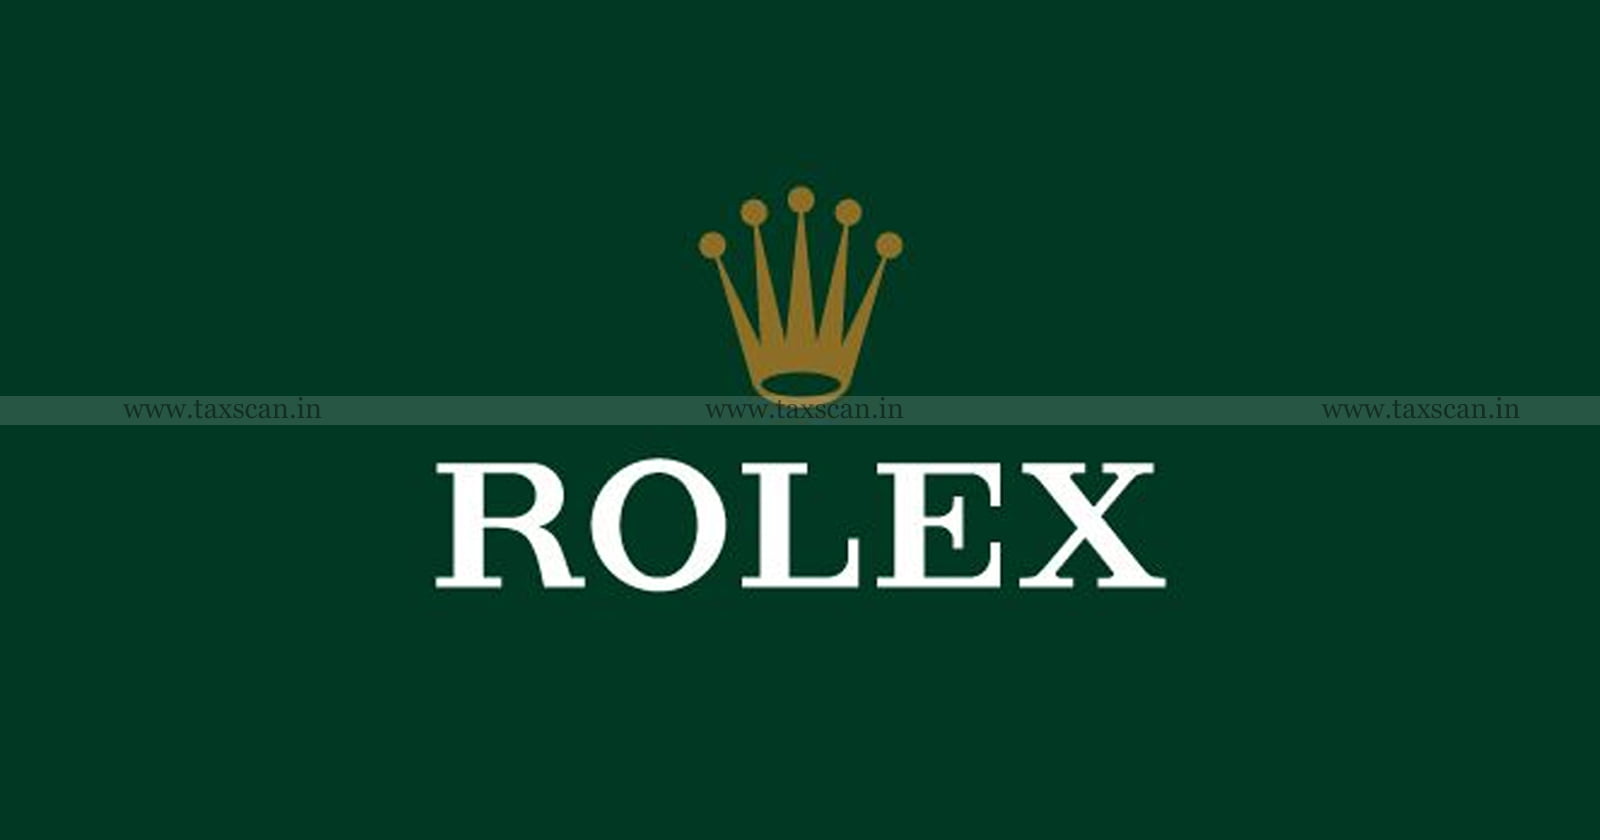 Rolex - CESTAT - demand - Service Tax - Foreign Agent - demand of Service Tax - Service Tax on Commission - Customs - Excise - Service Tax - taxscan